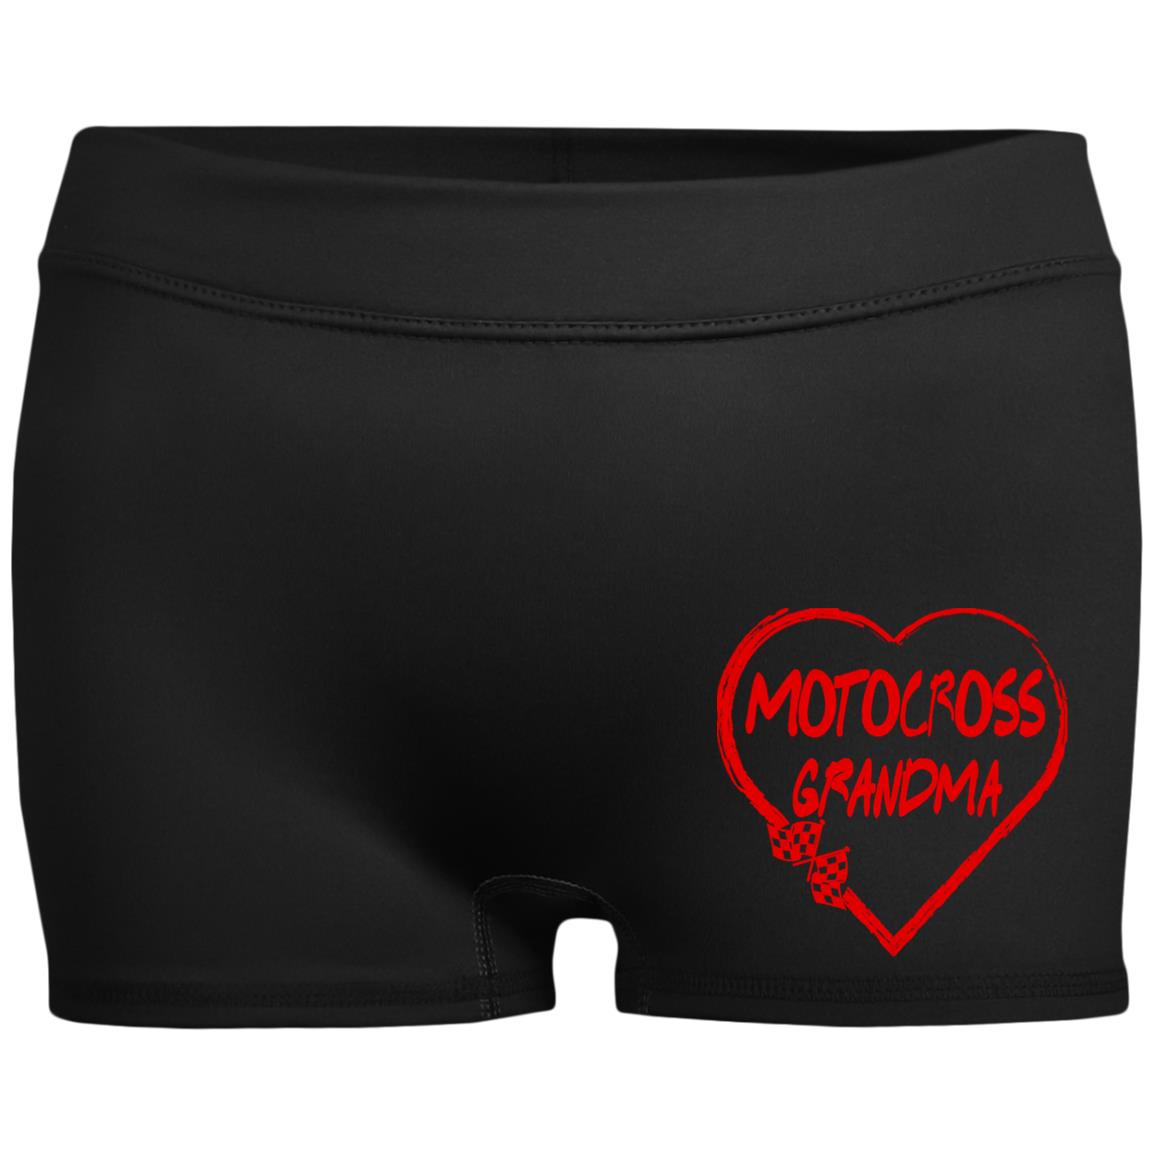 Motocross Grandma Heart Ladies' Fitted Moisture-Wicking 2.5 inch Inseam Shorts